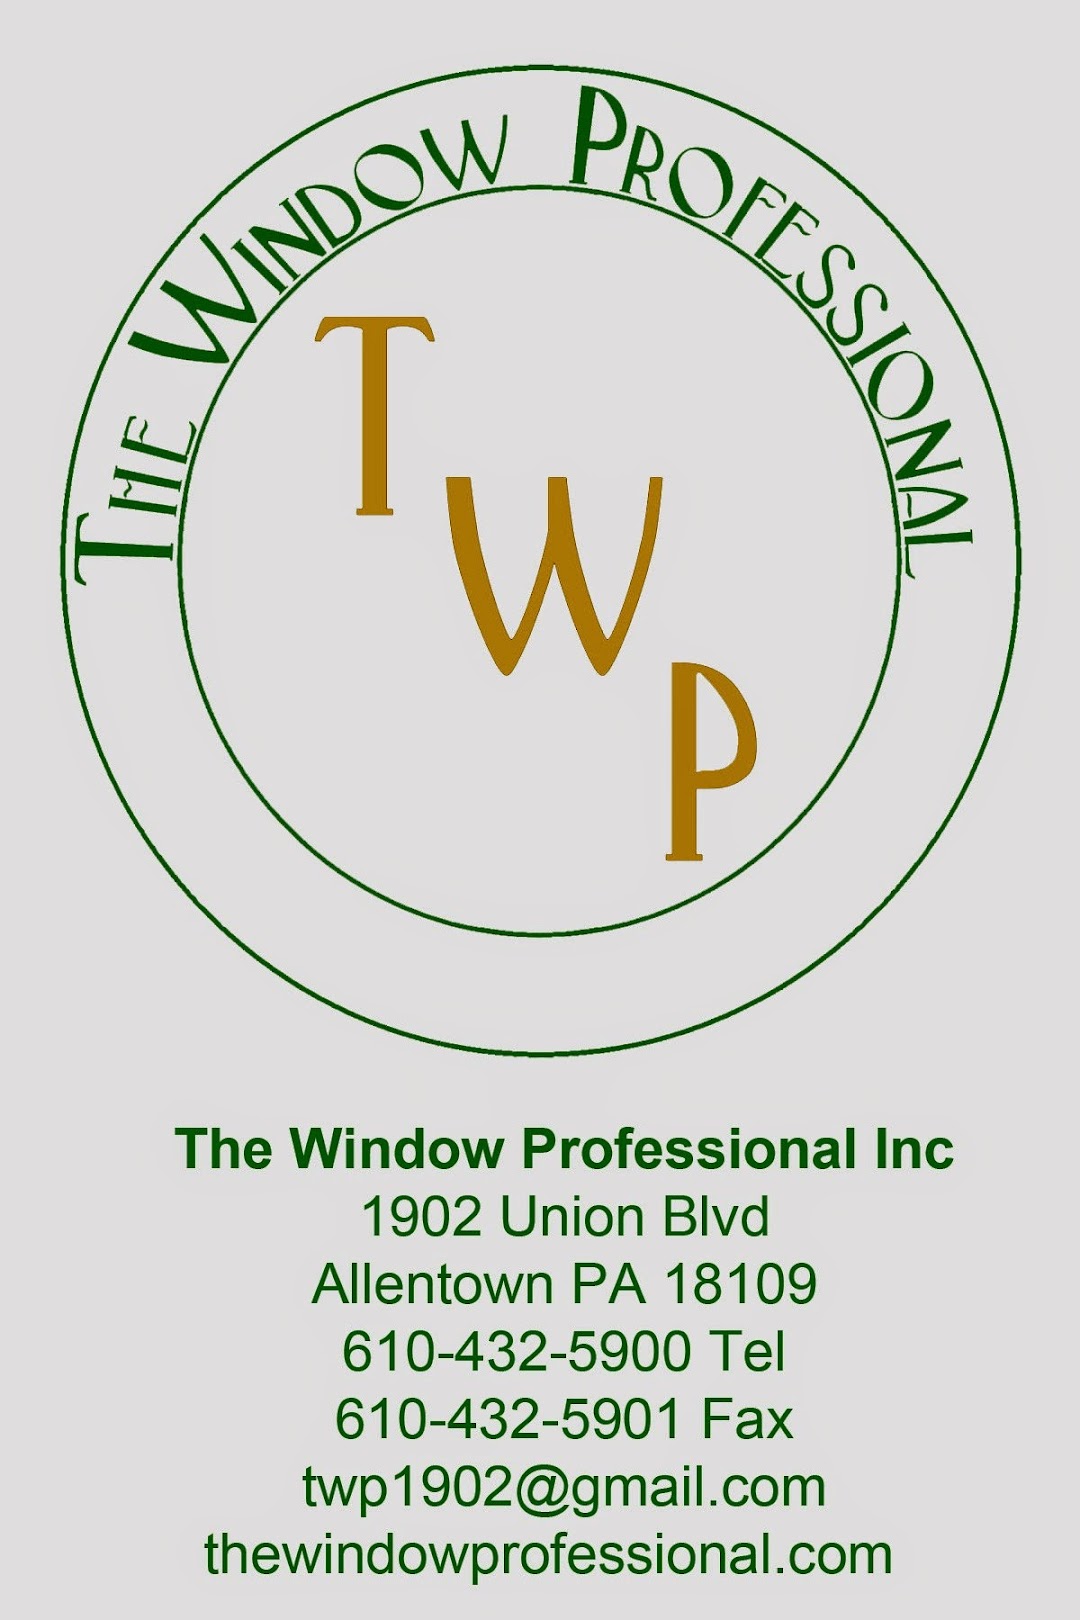 The Window Professional